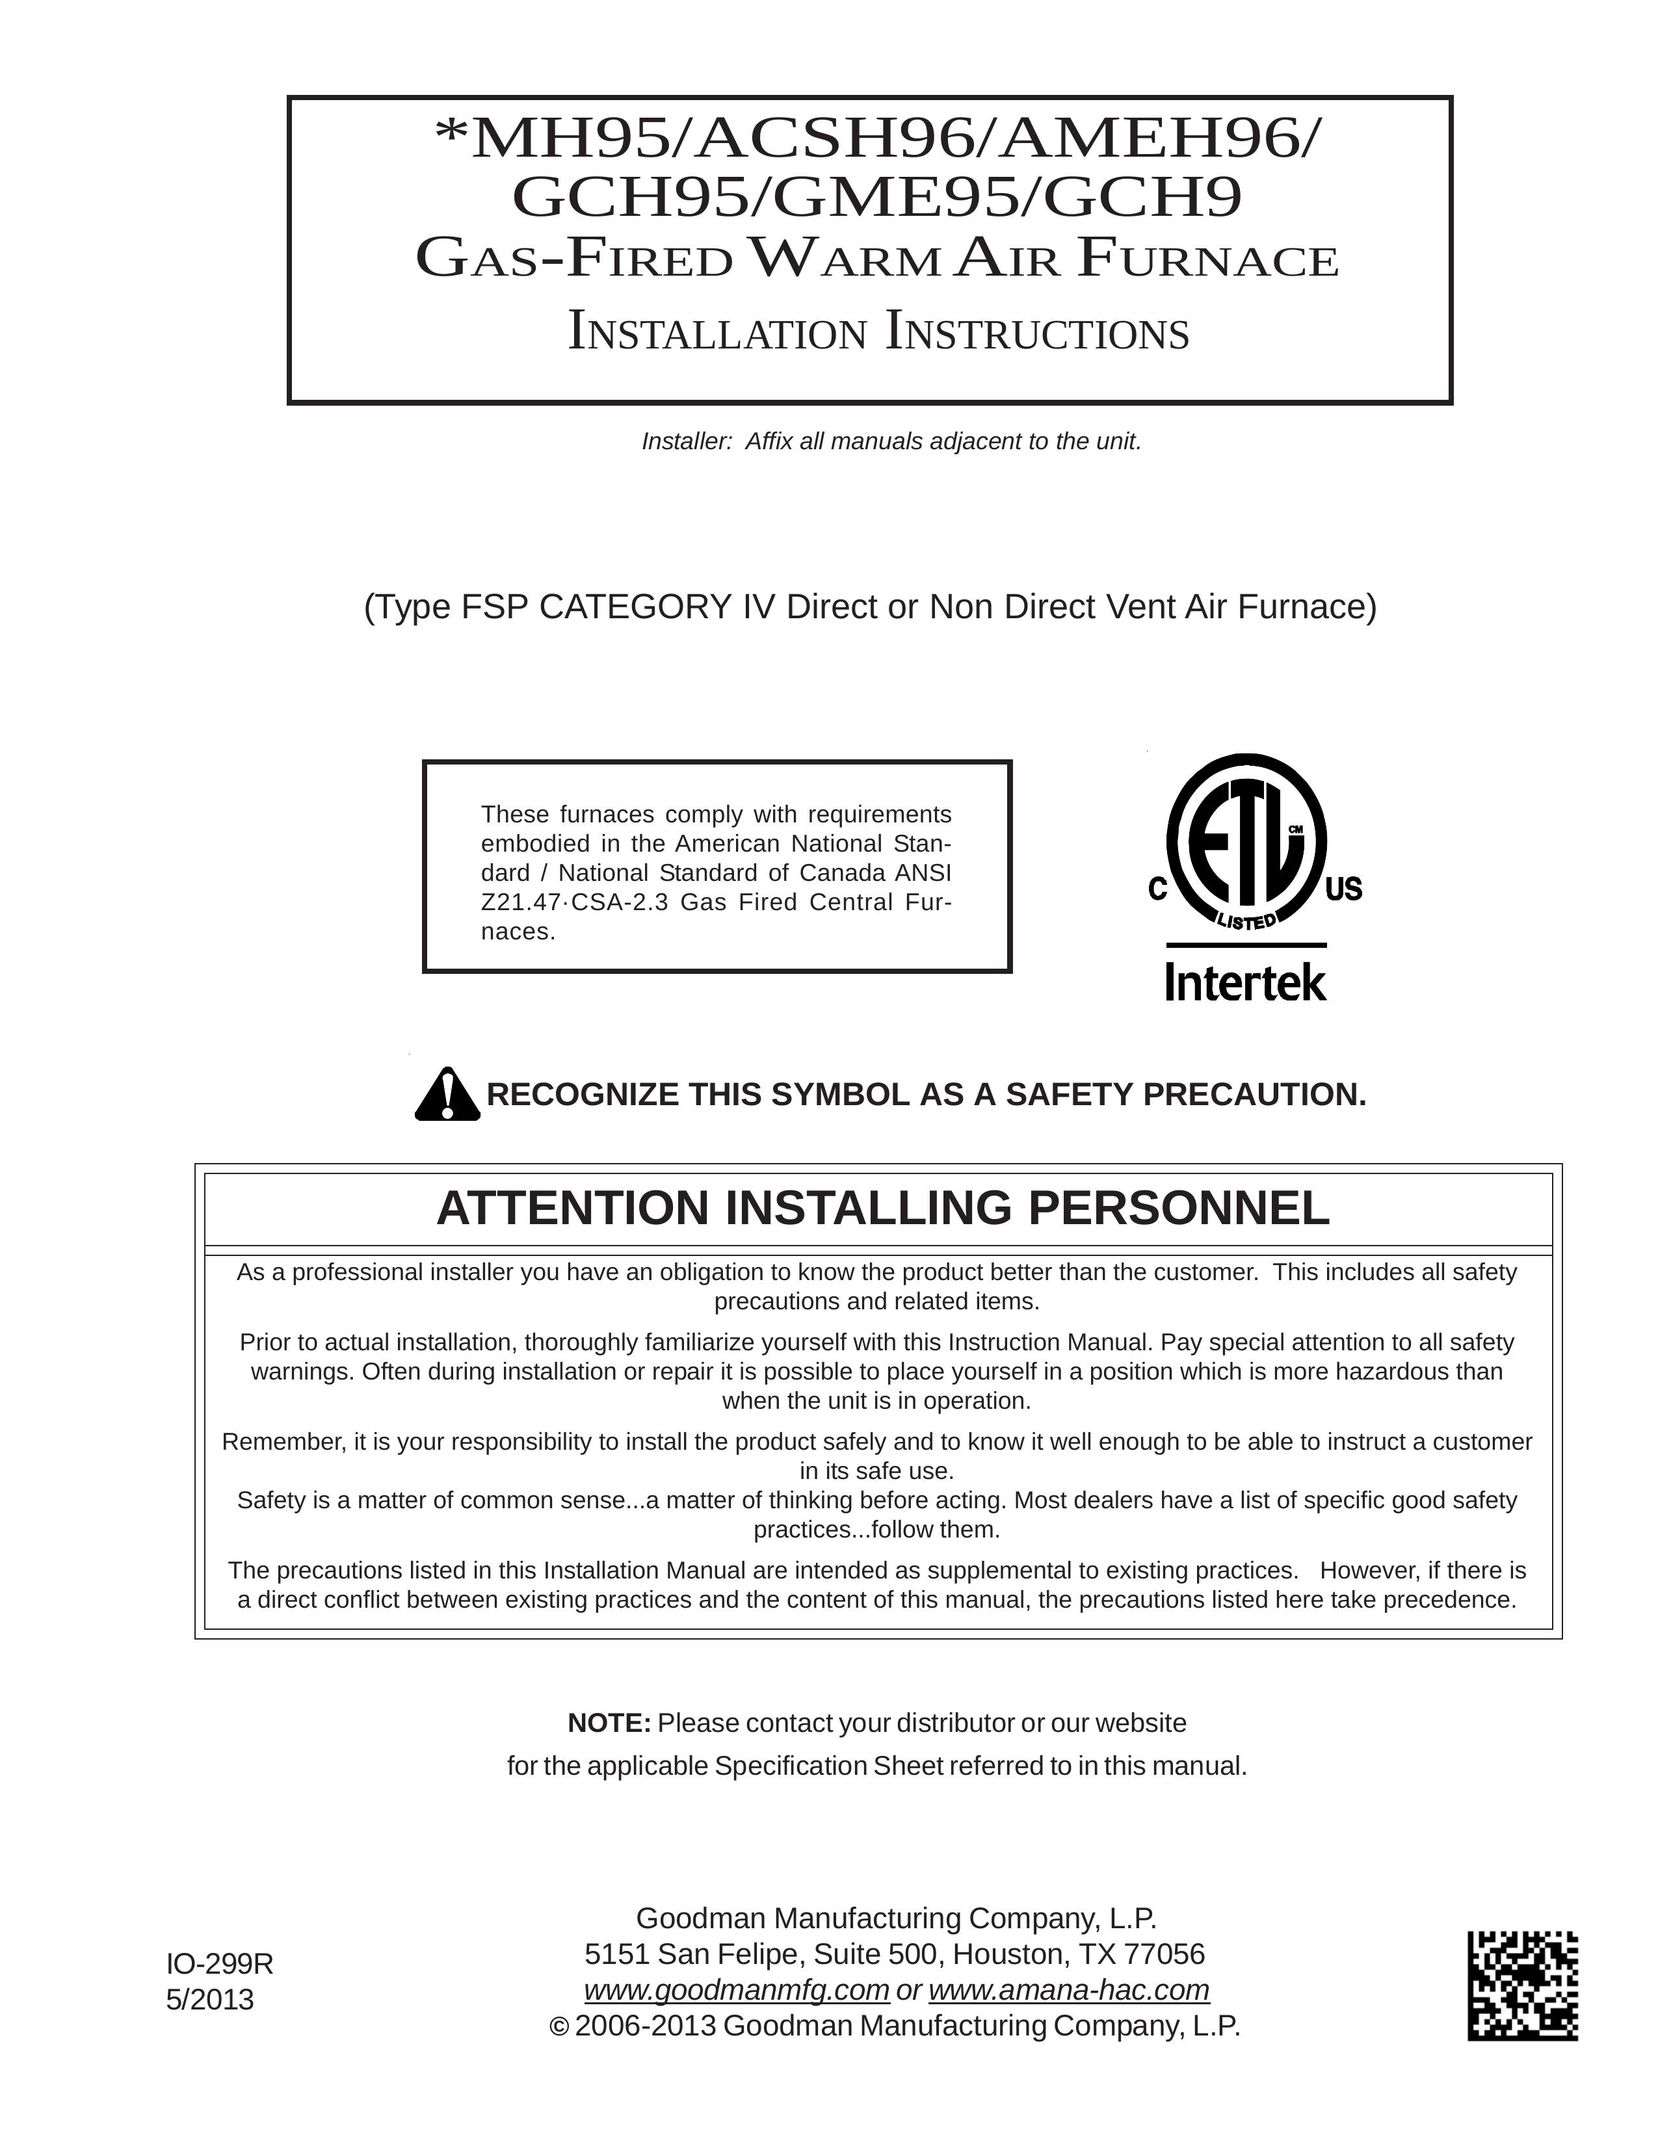 Goodman Mfg GAS-FIRED WARM AIR FURNACE Furnace User Manual